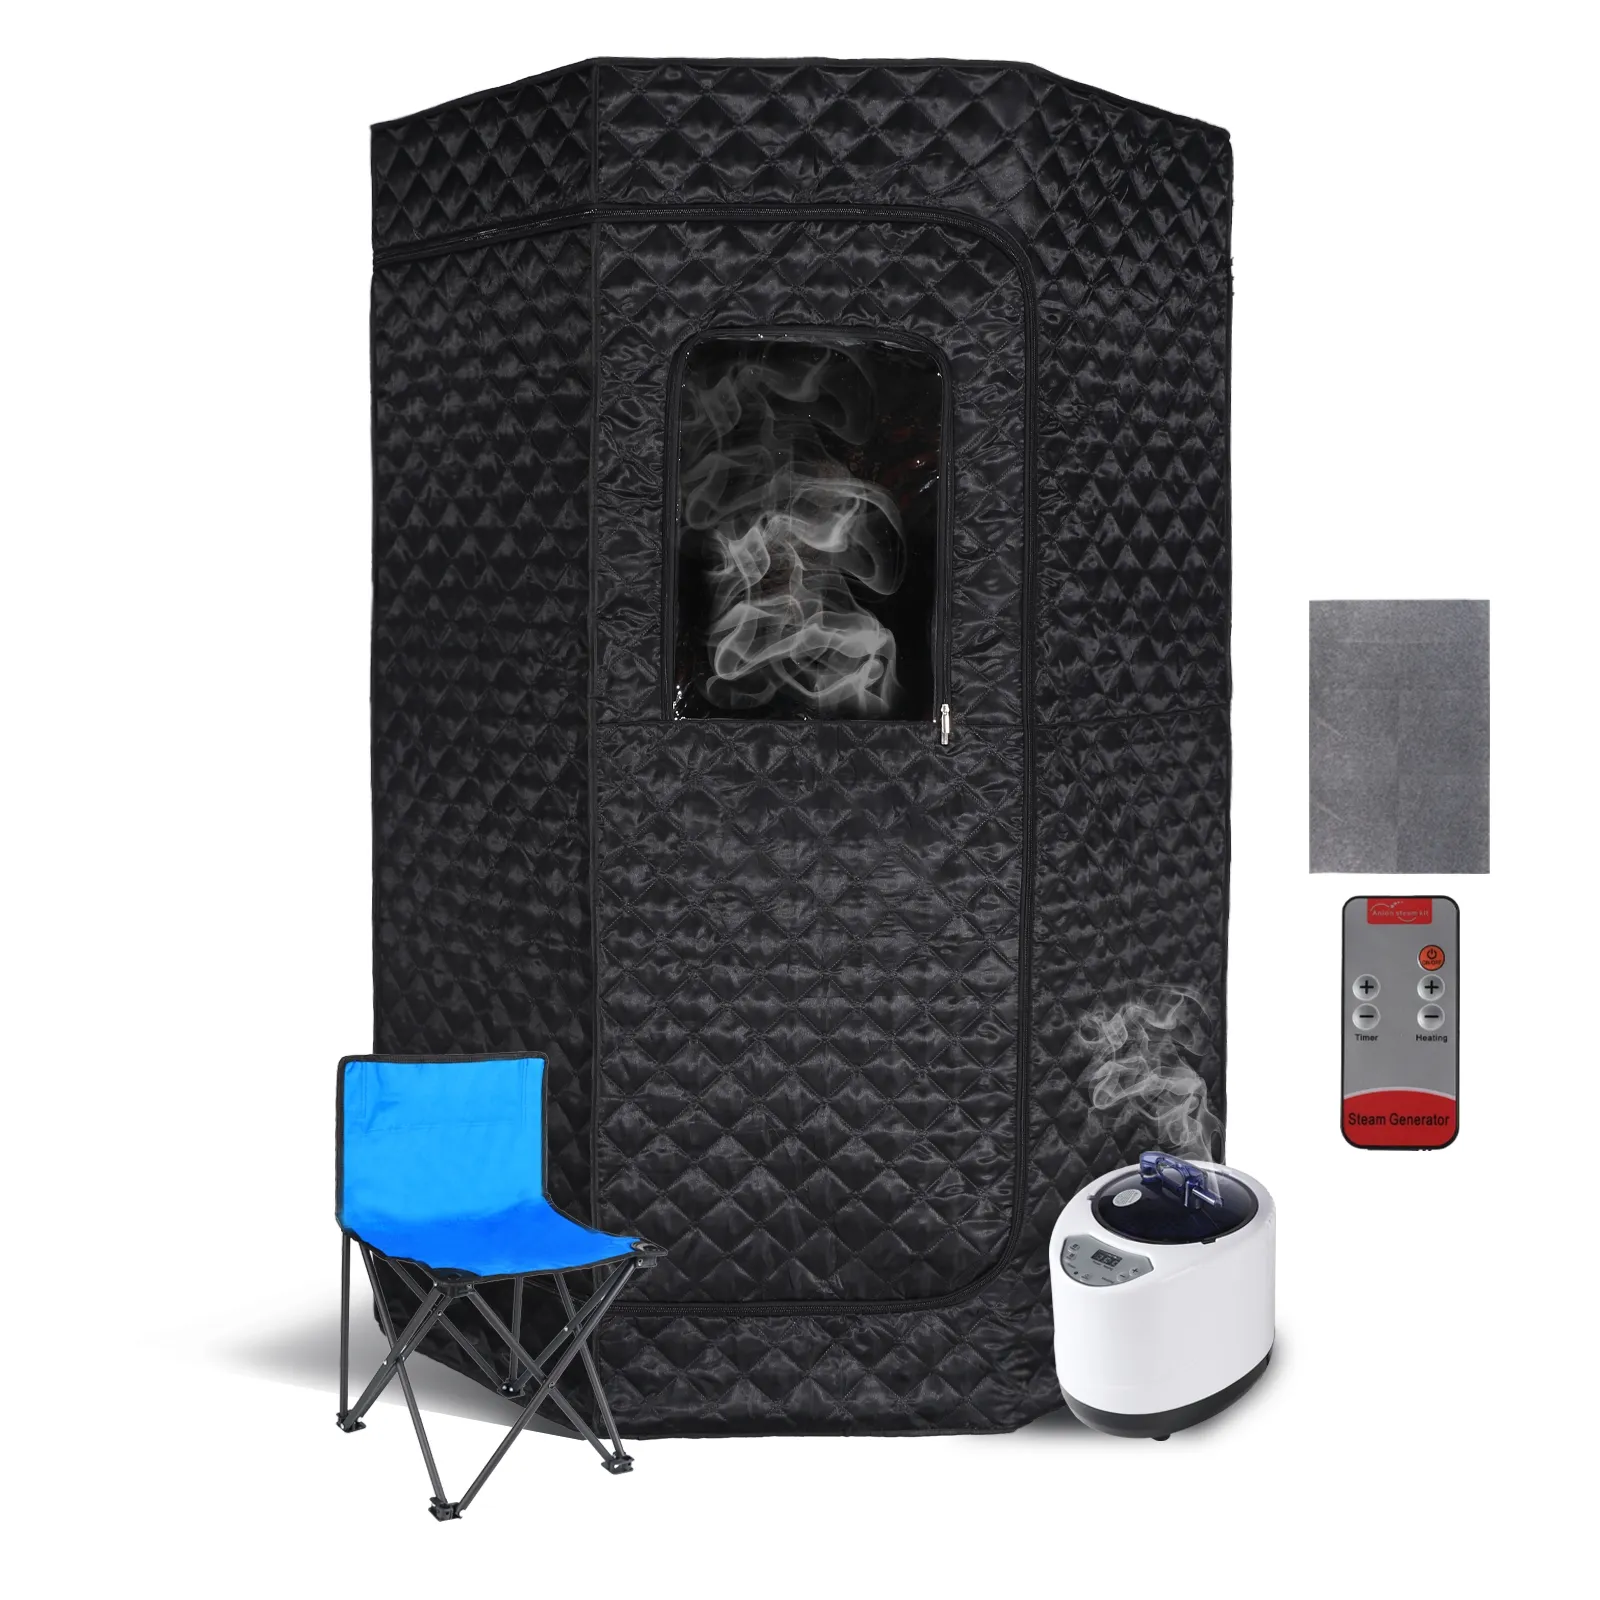 Hot selling steam sauna box for single person portable steam sauna room beauty